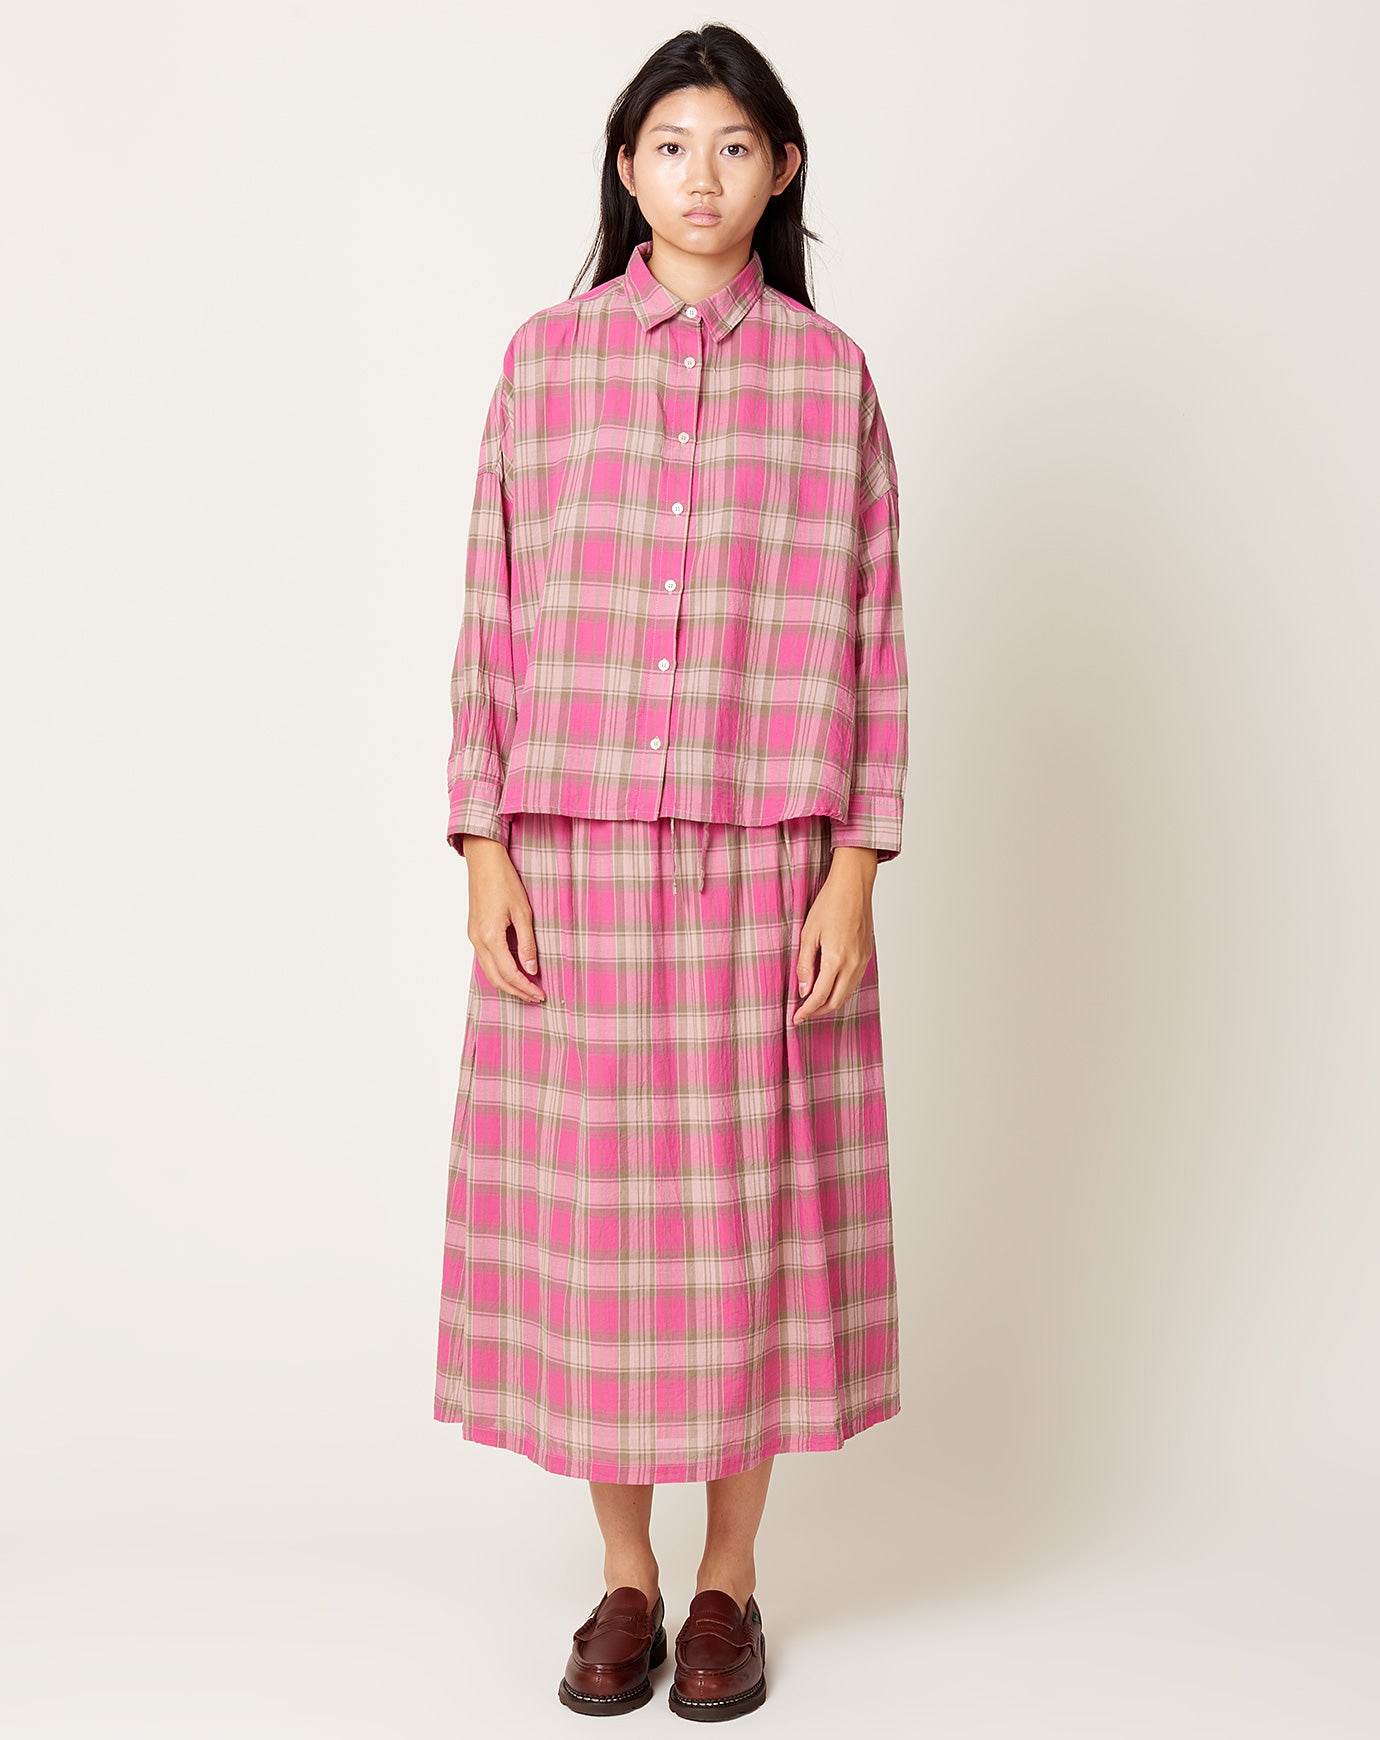 Ichi Madras Check Skirt in Pink